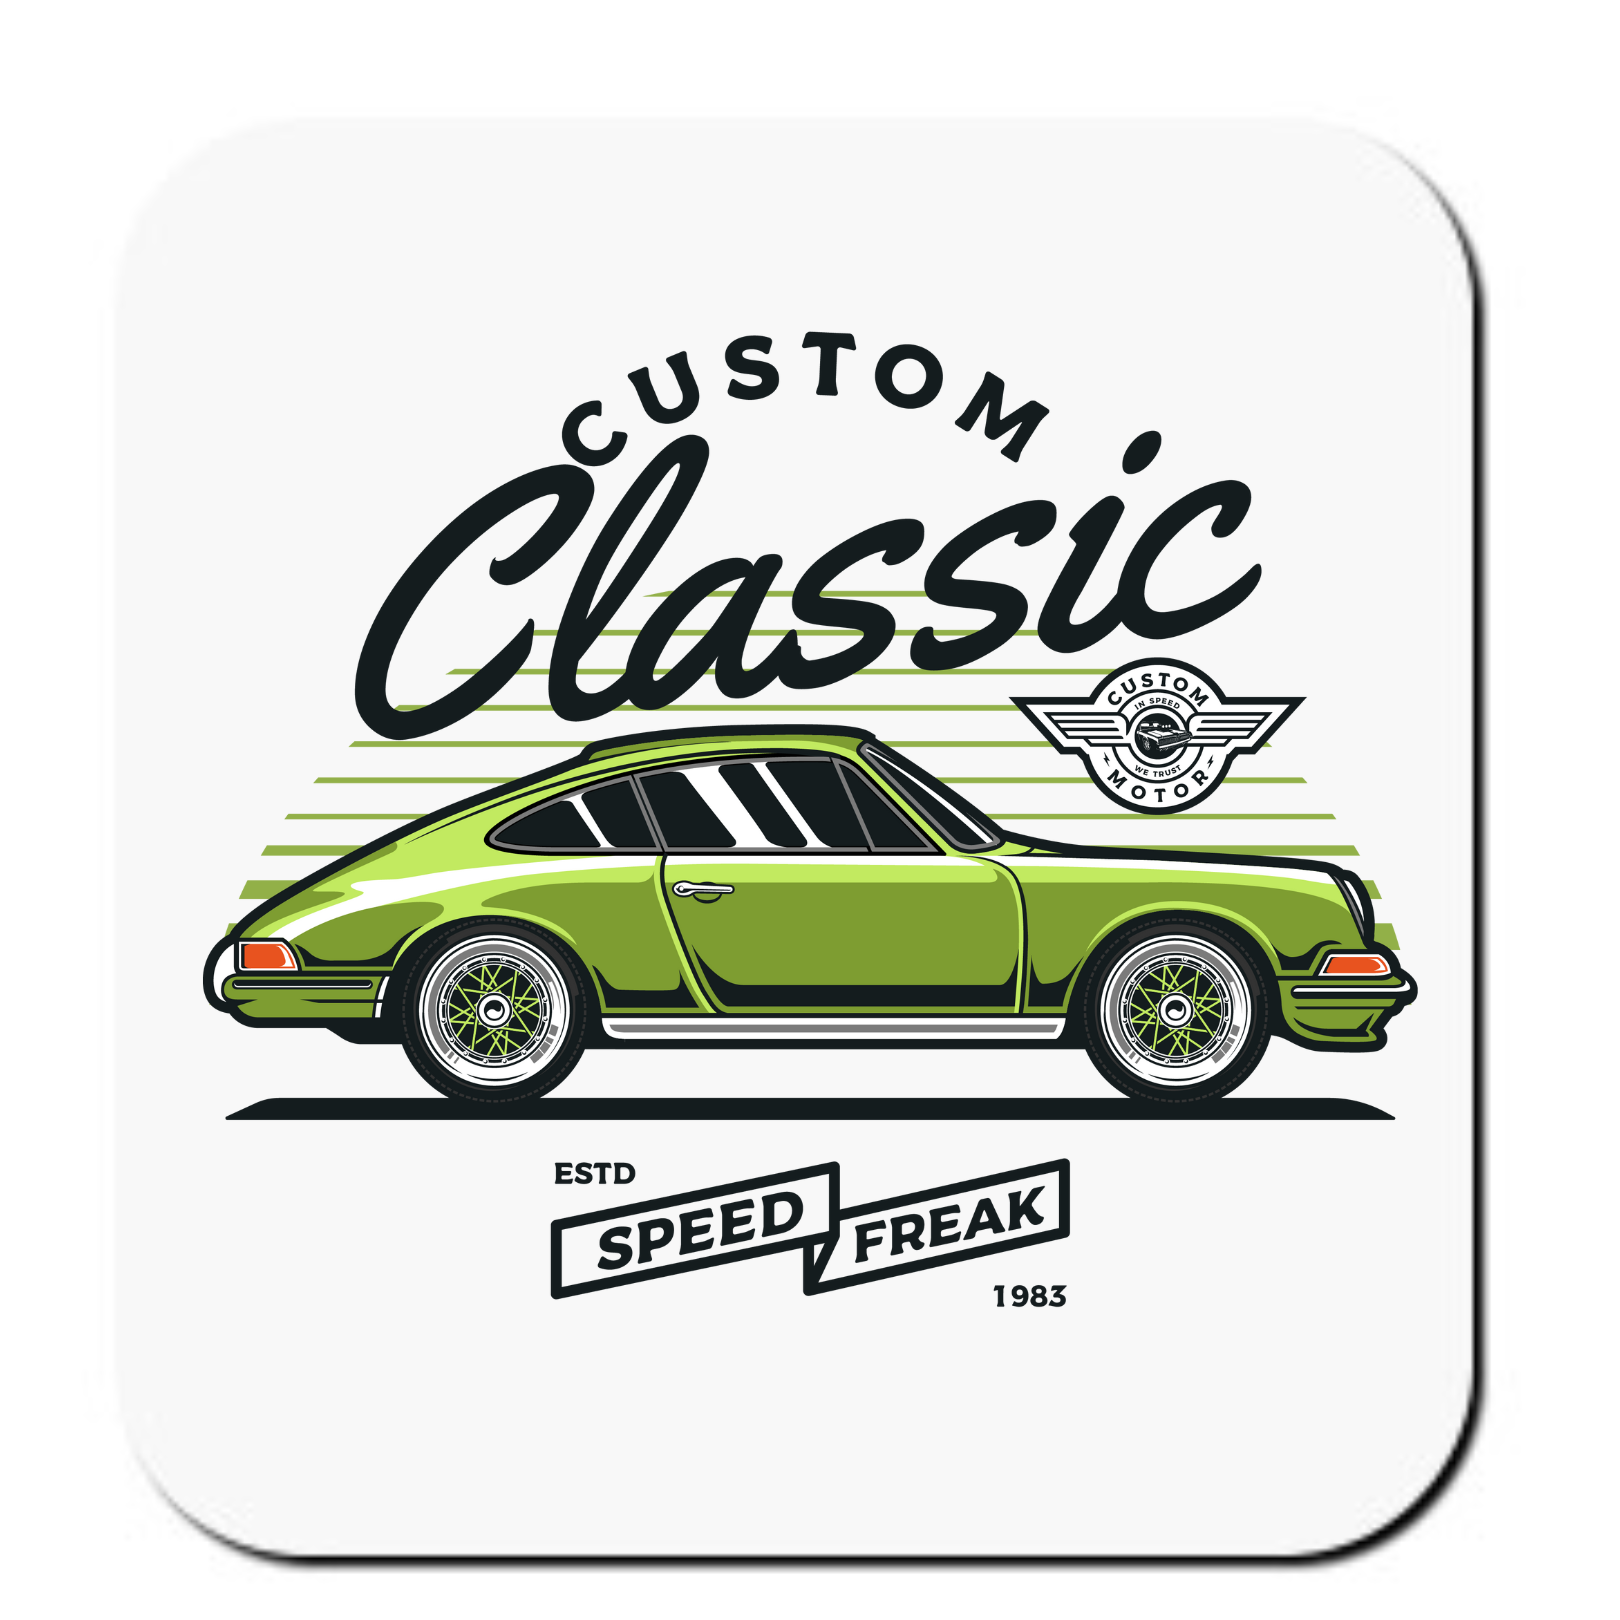 Custom Classic - 911 - Set of 4 Coasters - Mister Snarky's